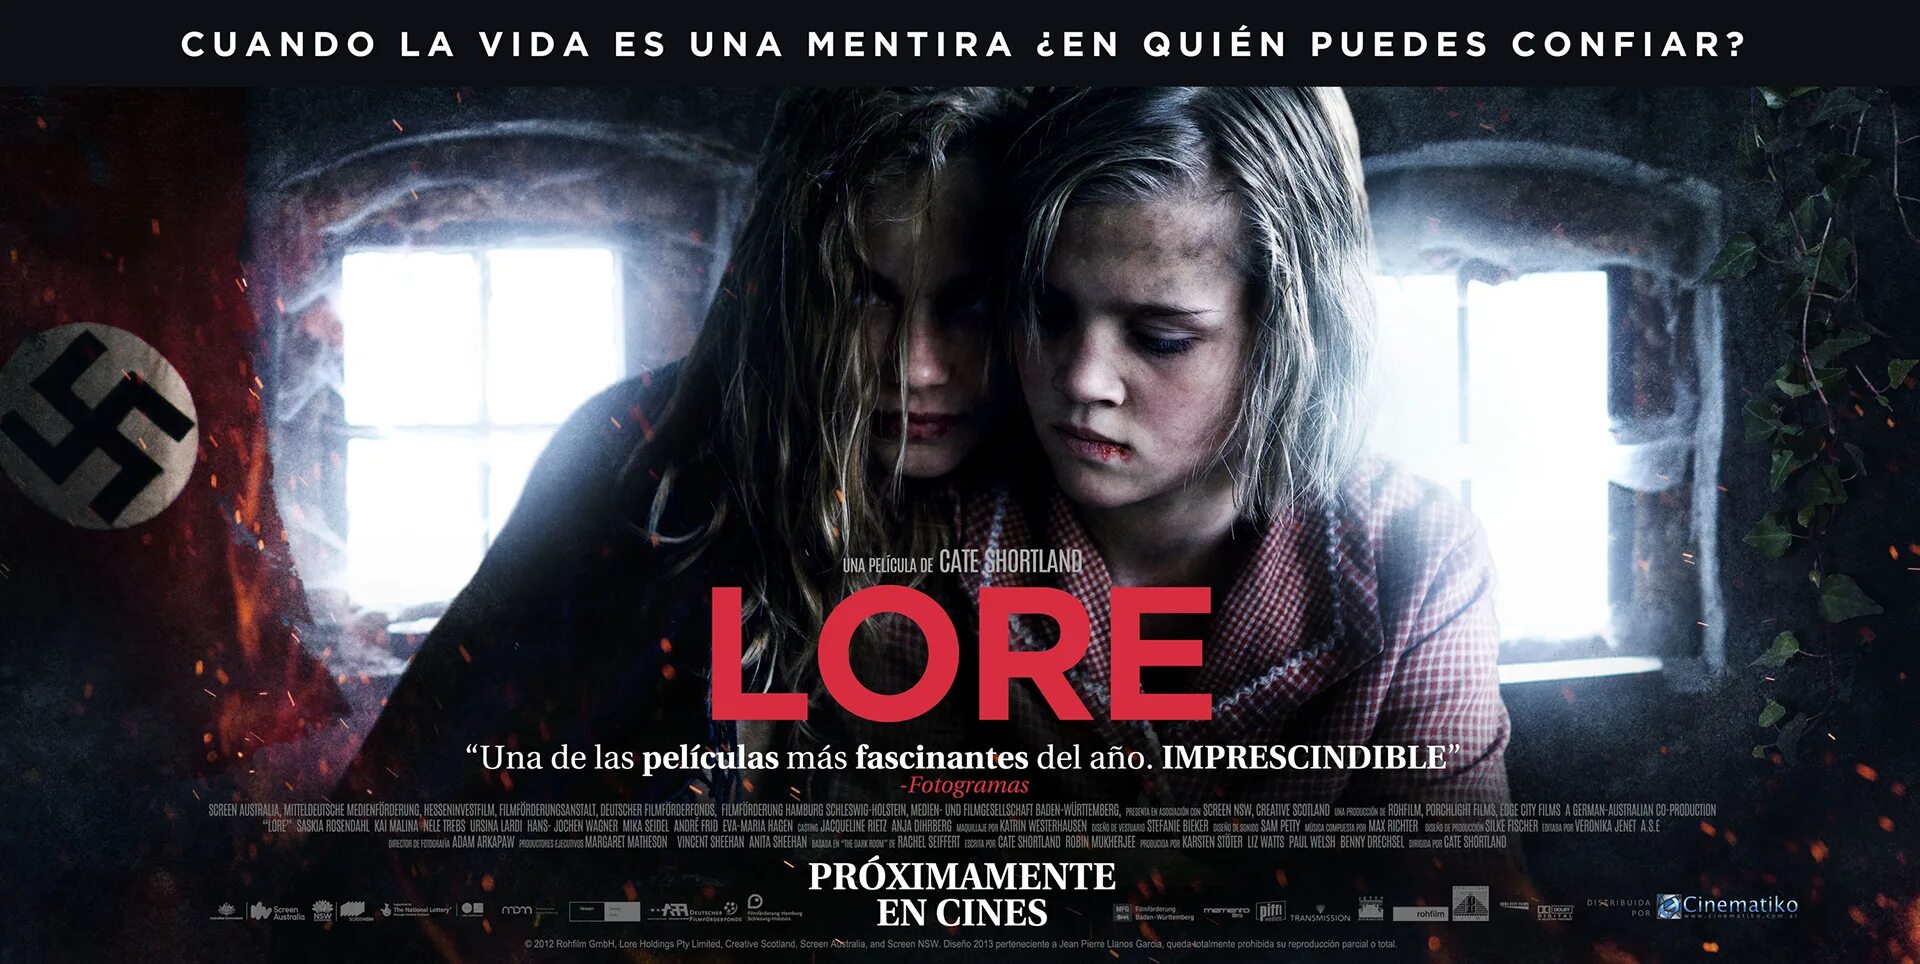 Lore 5. Лоре / Lore (2012.